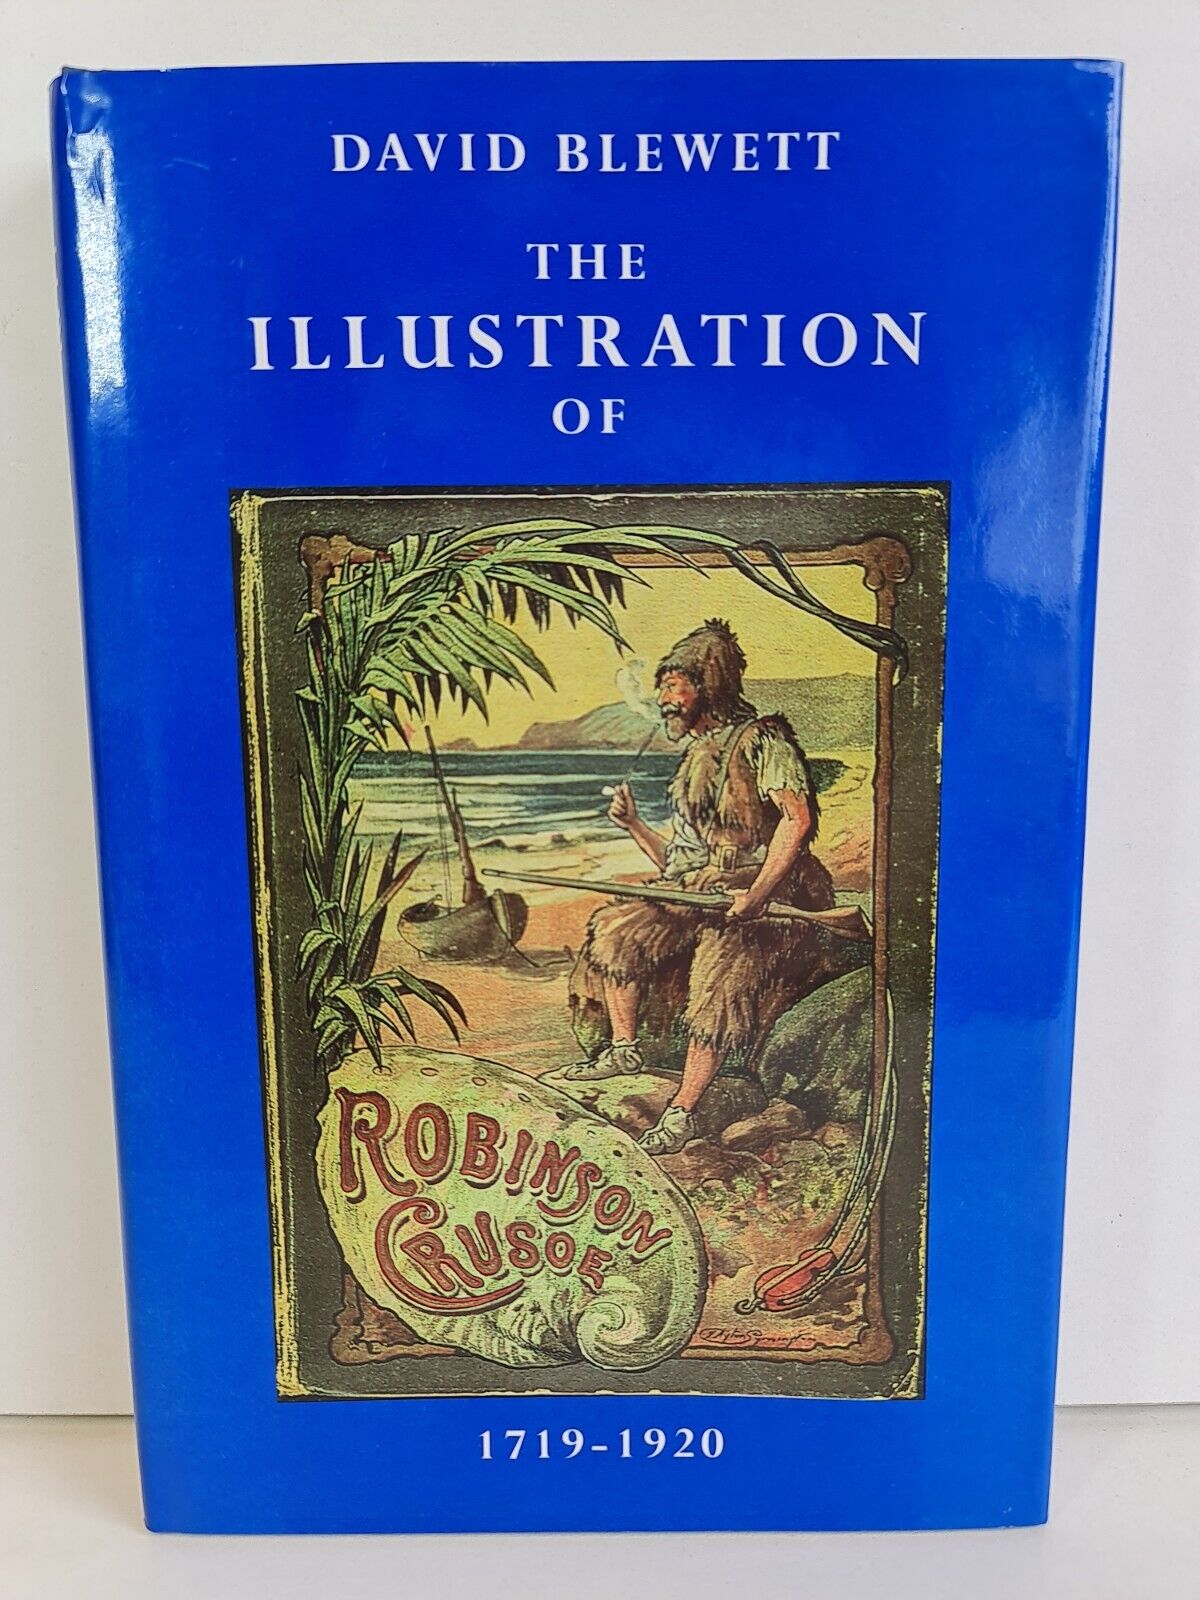 The Illustration of Robinson Crusoe 1719-1920 by David Blewett